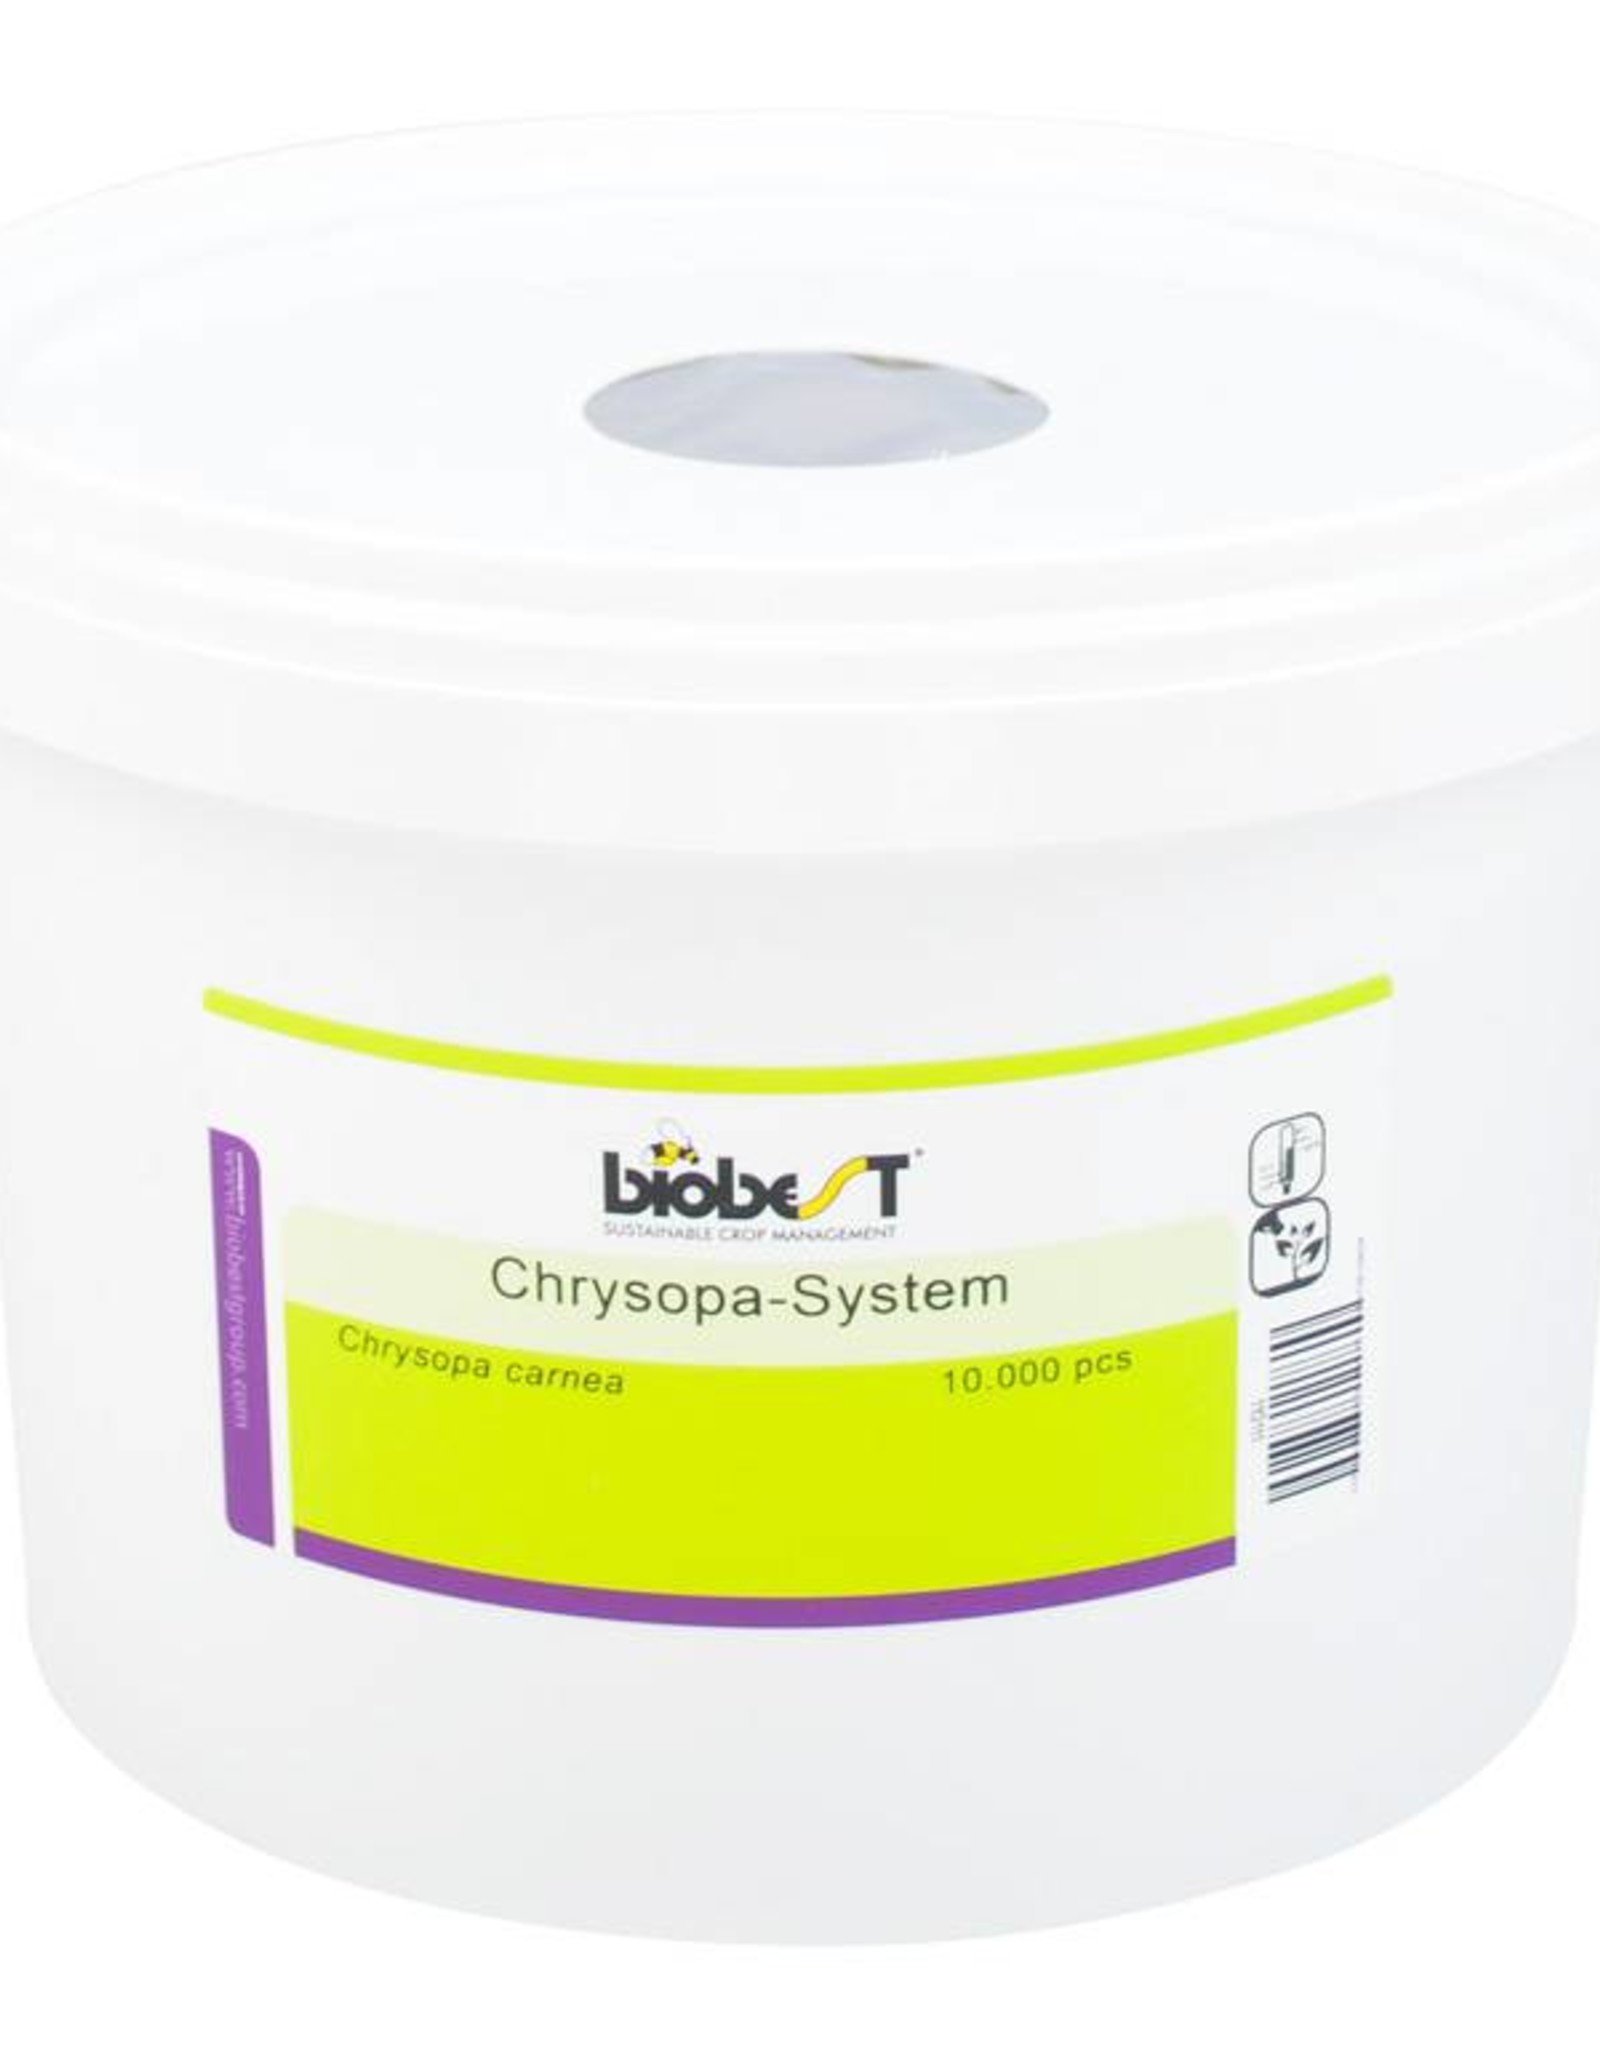 Brimex Biobest Bladluis bestrijden met gaasvlieg Chrysopa